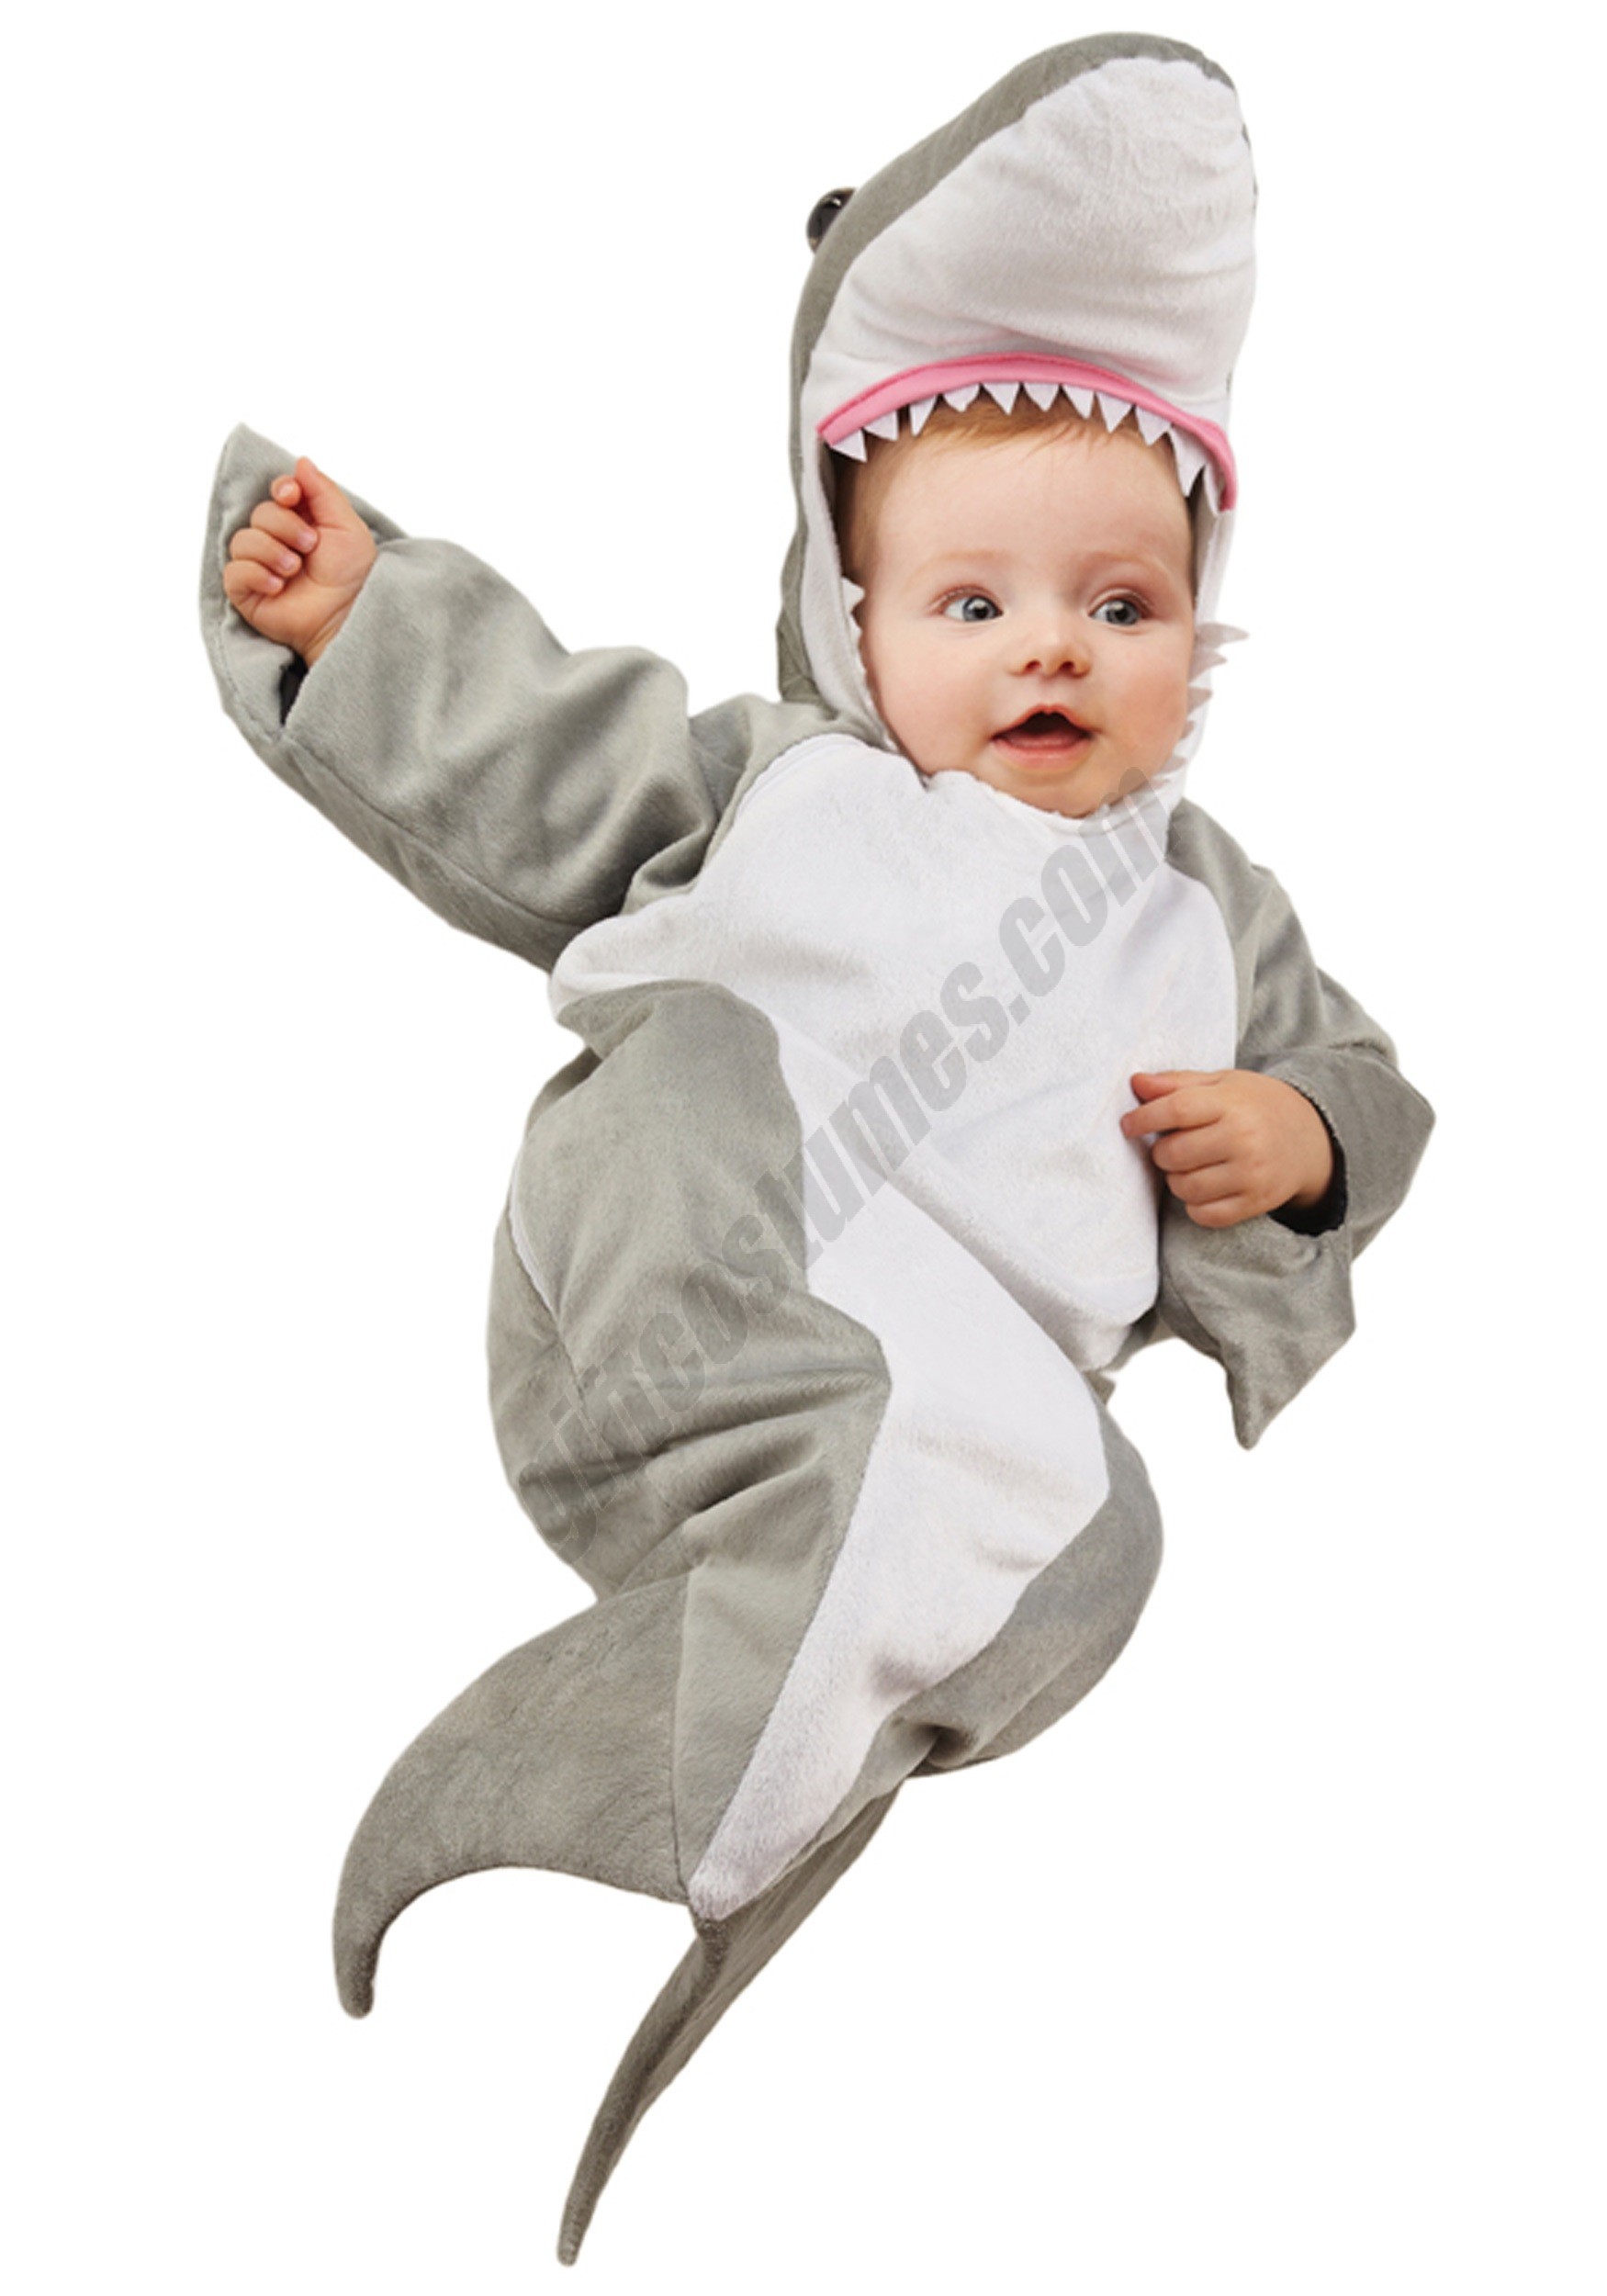 Infant Shark Bunting Costume Promotions - Infant Shark Bunting Costume Promotions